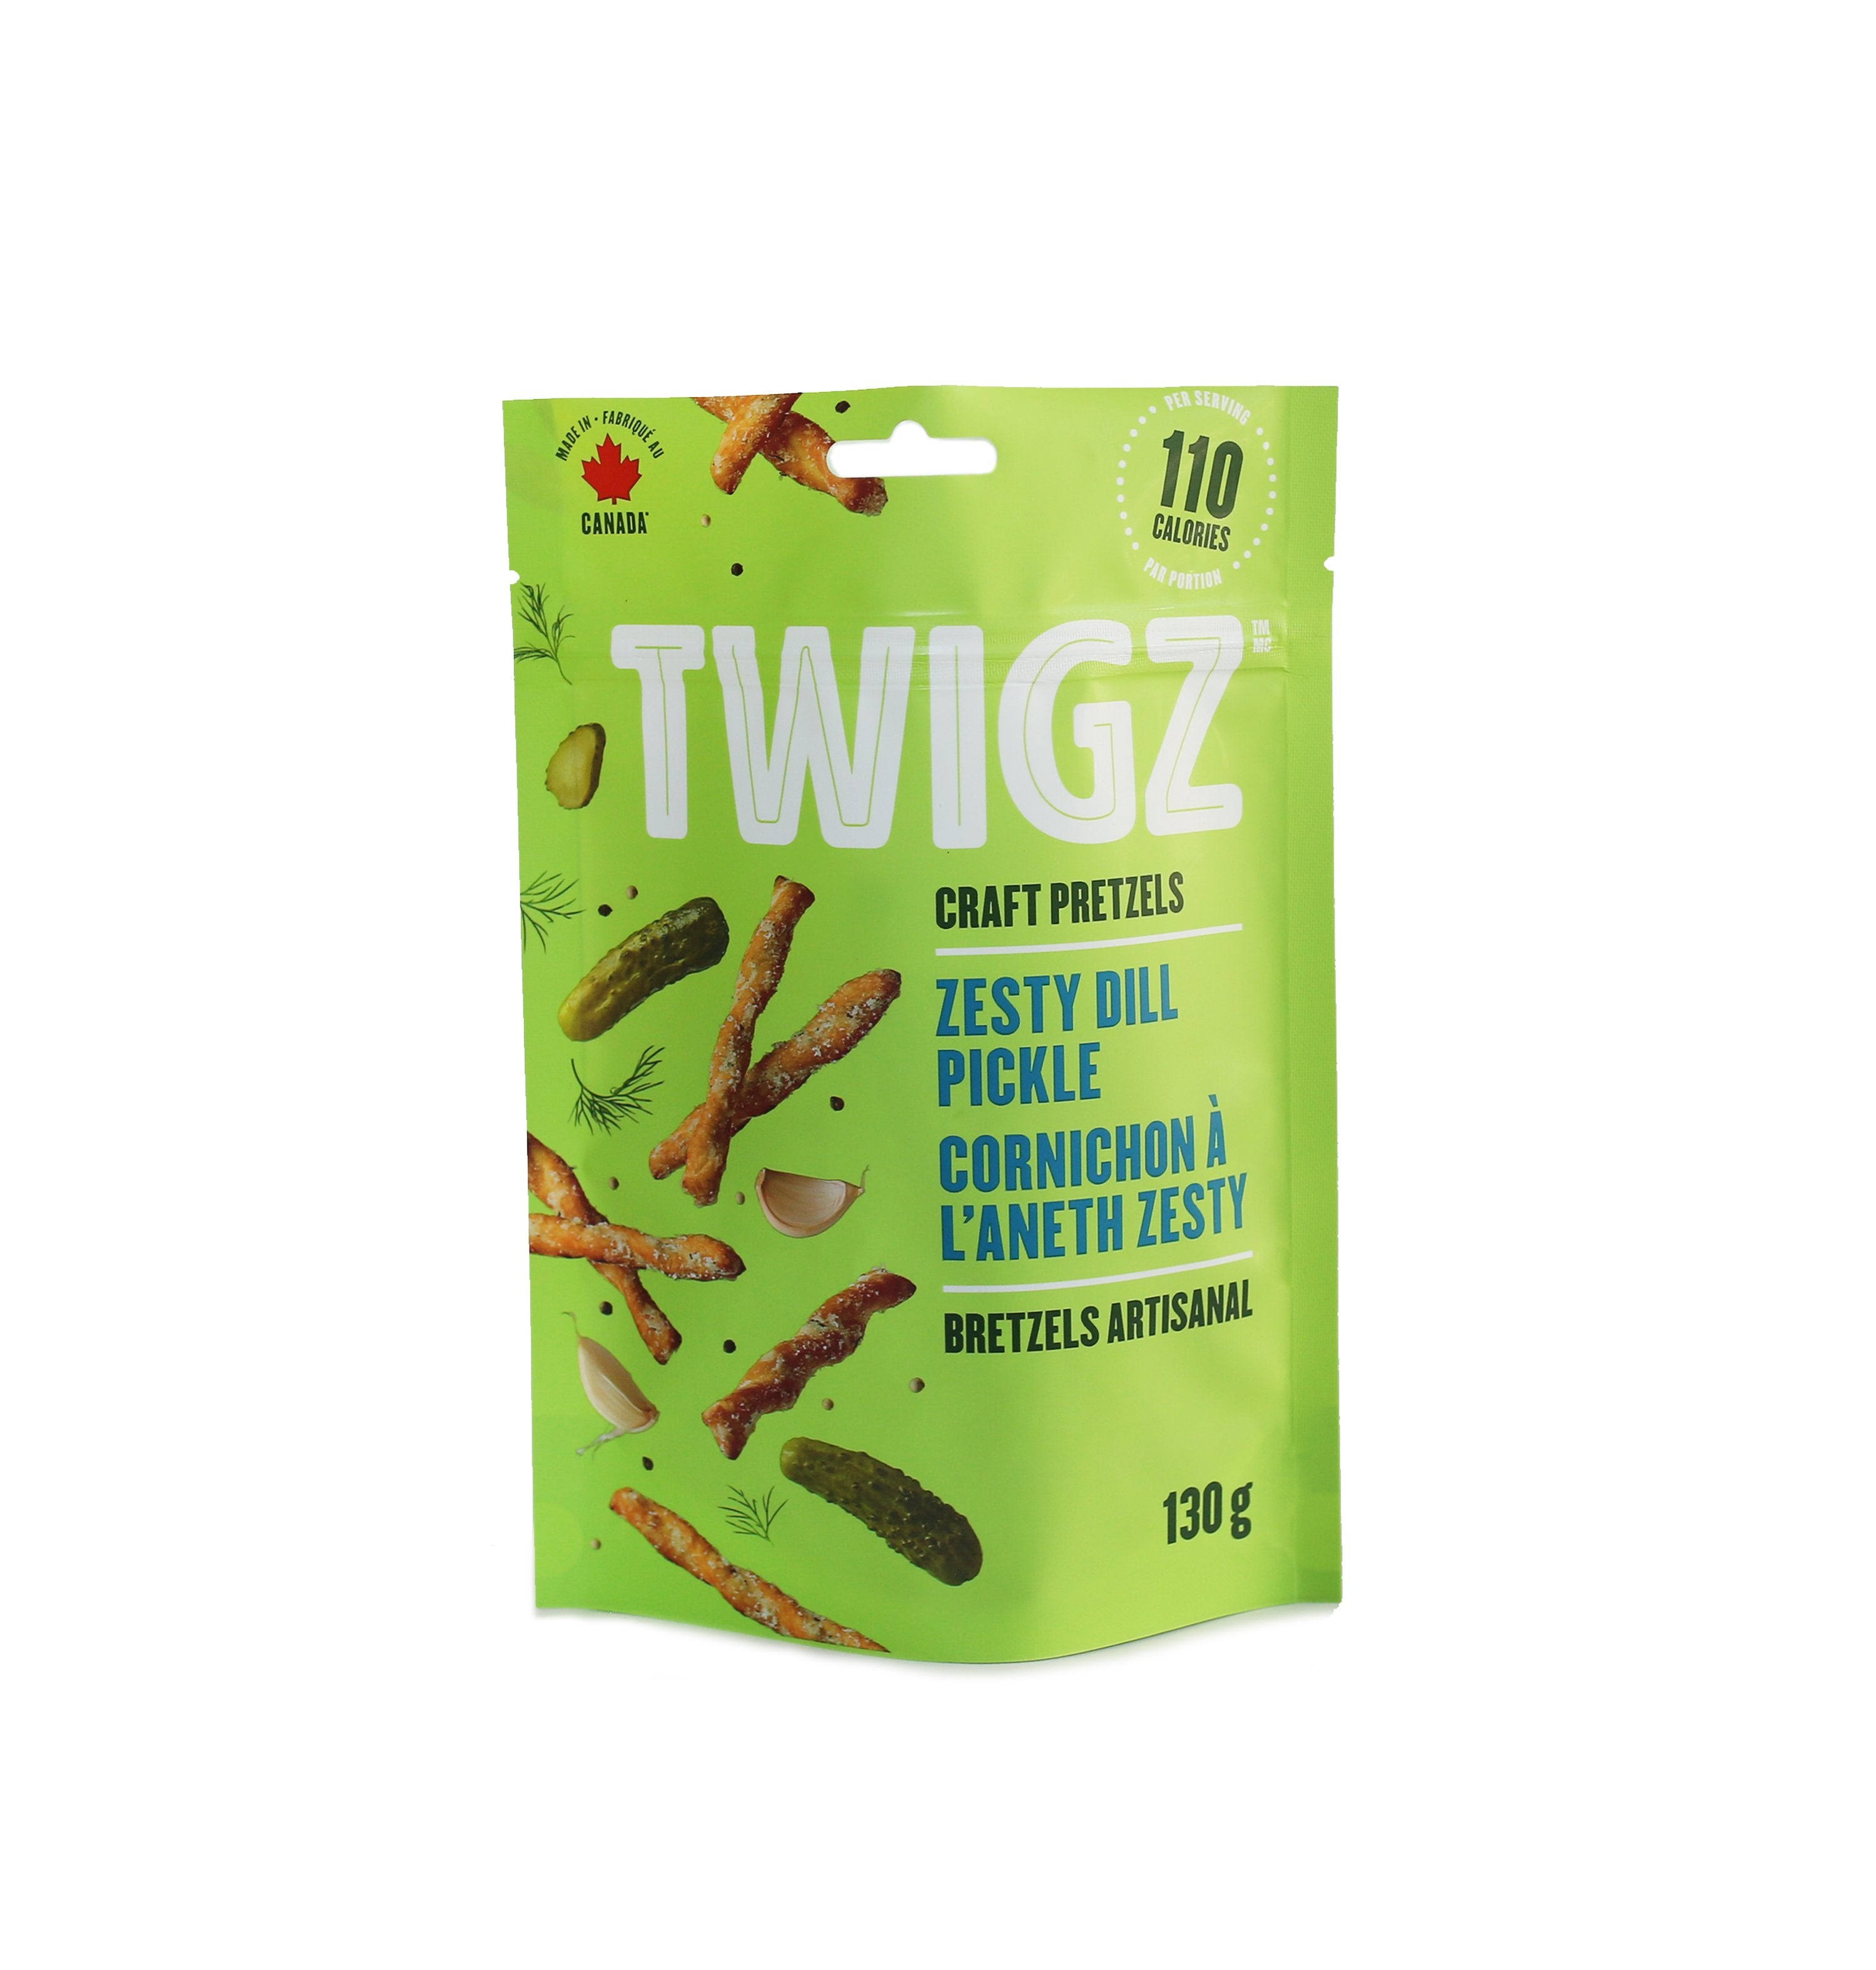 Twigz Zesty Dill Pickle Craft Pretzels - 130 g